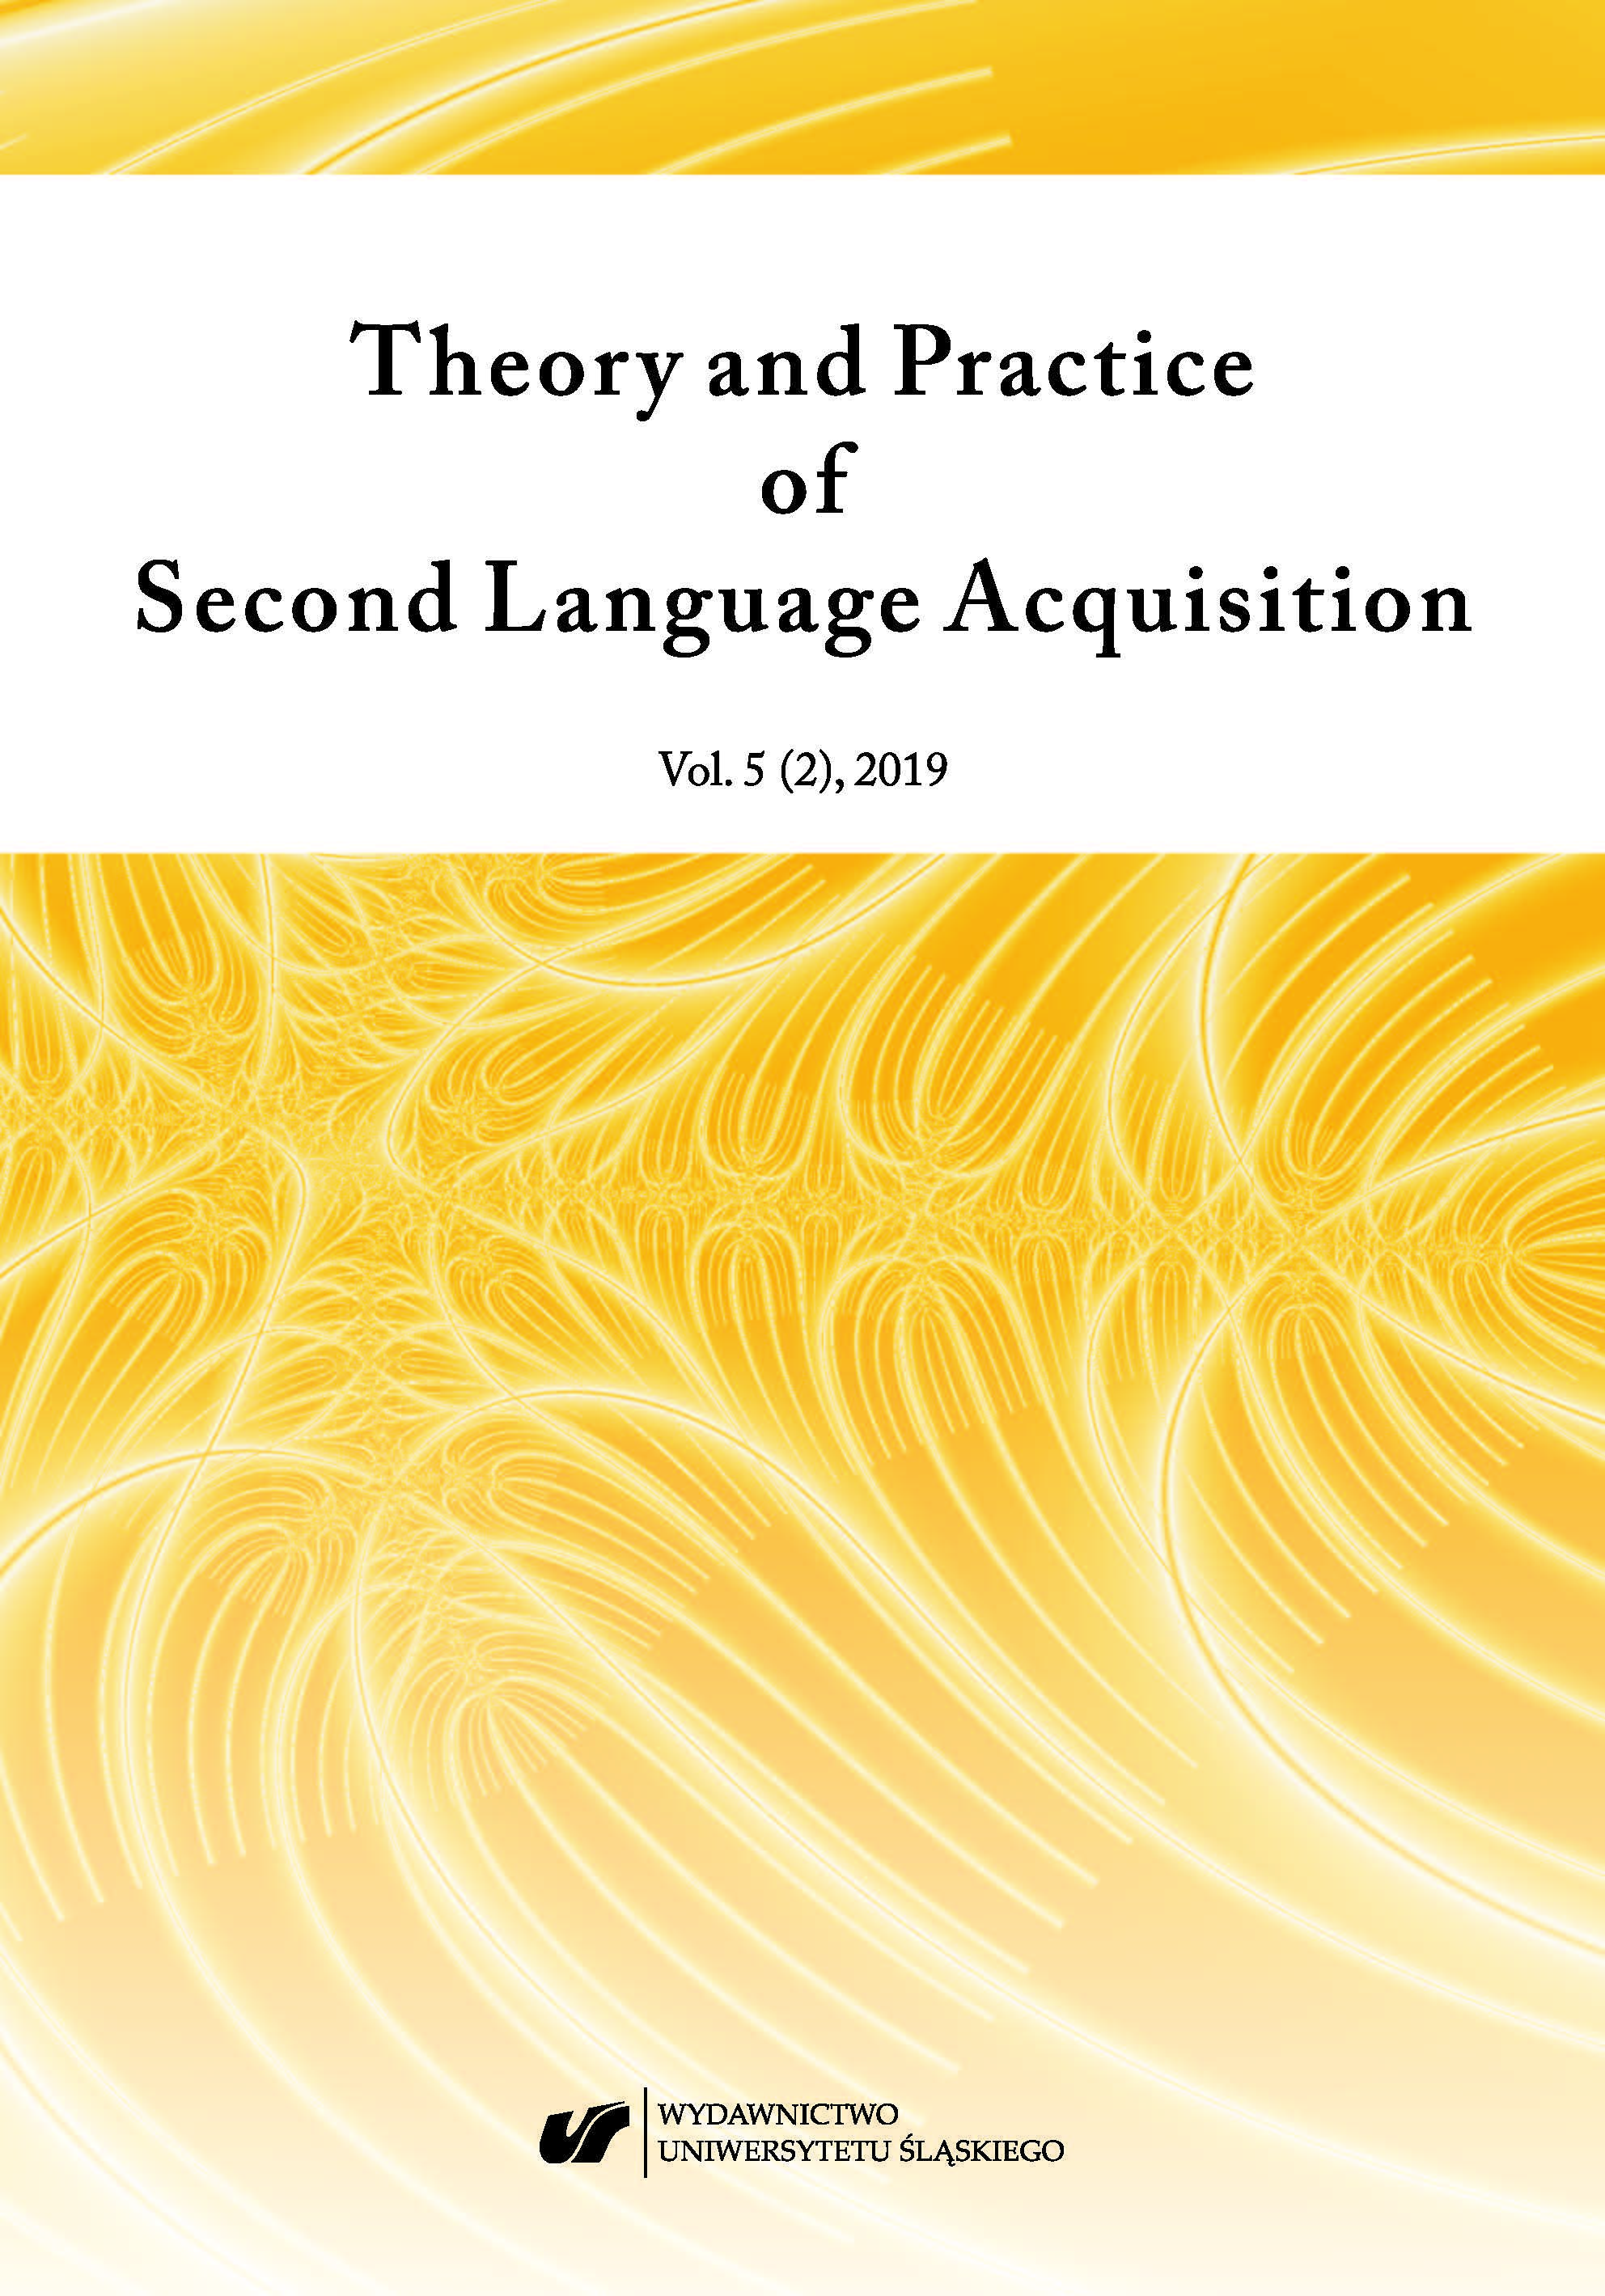 Lia Litosseliti (ed.), Research Methods in Linguistics (2nd ed.). London: Bloomsbury Academic, 2018